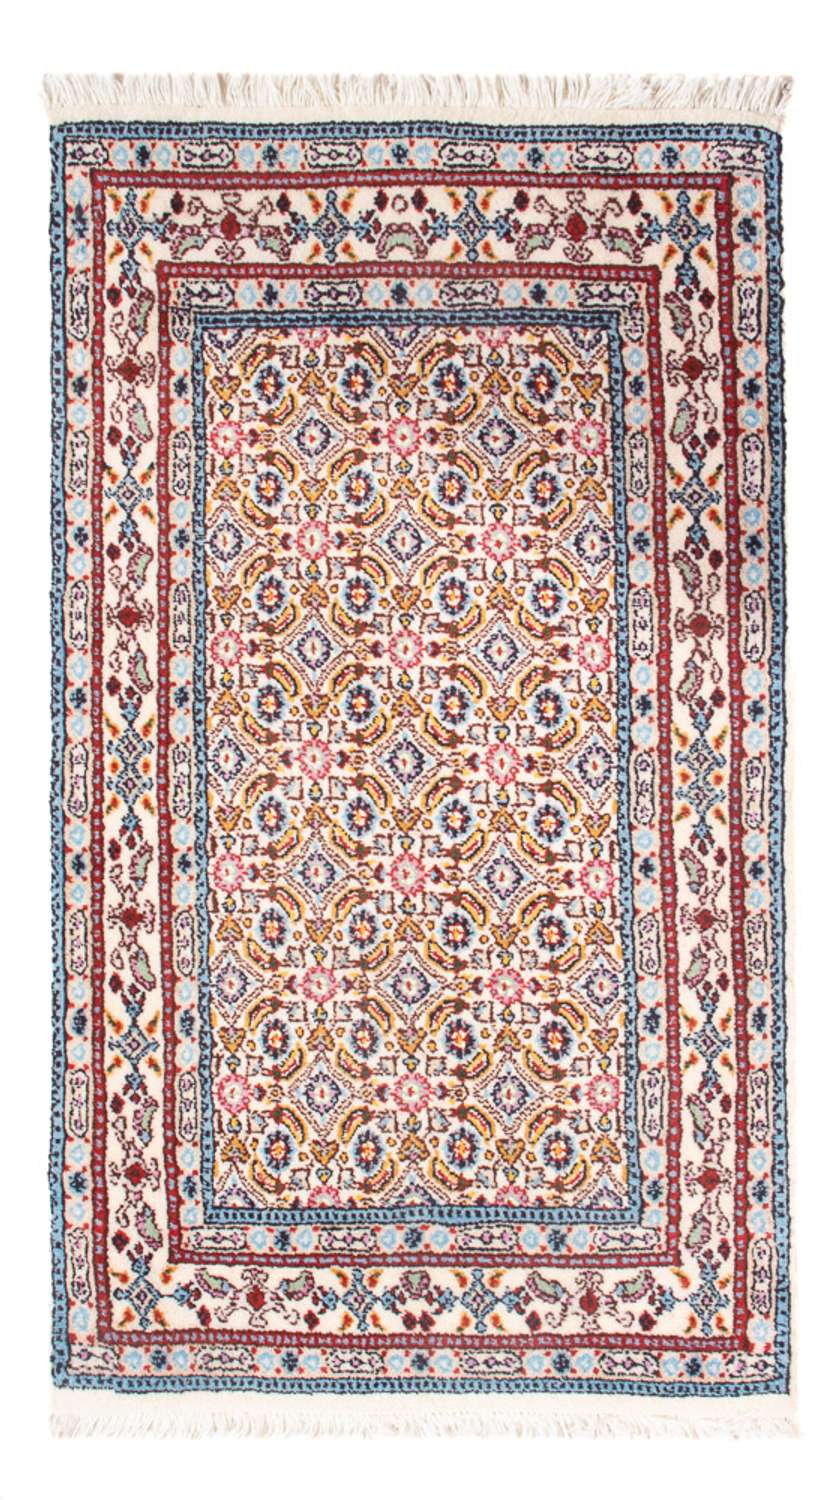 Tapis persan - Classique - Royal - 90 x 60 cm - multicolore